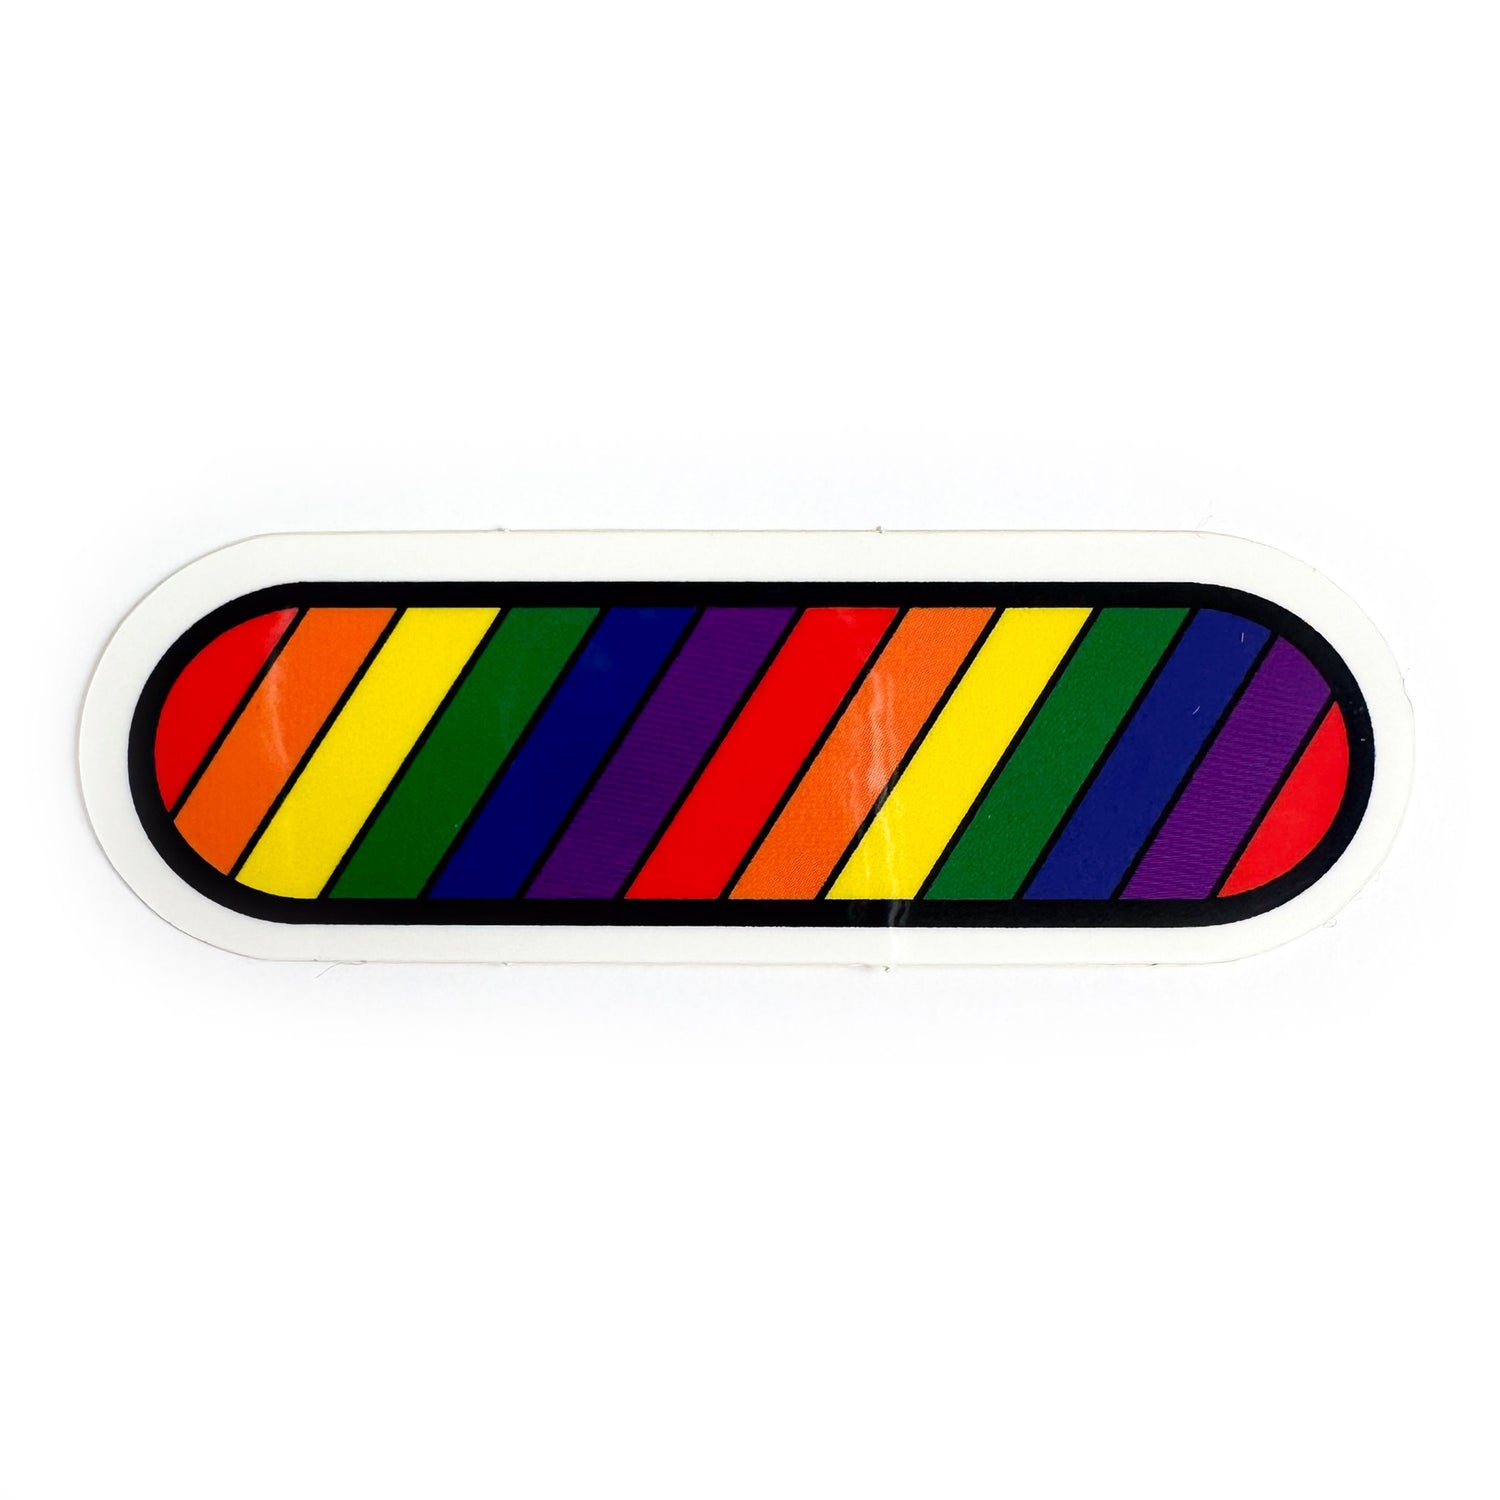 A capsule shaped vinyl sticker with diagonal rainbow stripes across it.